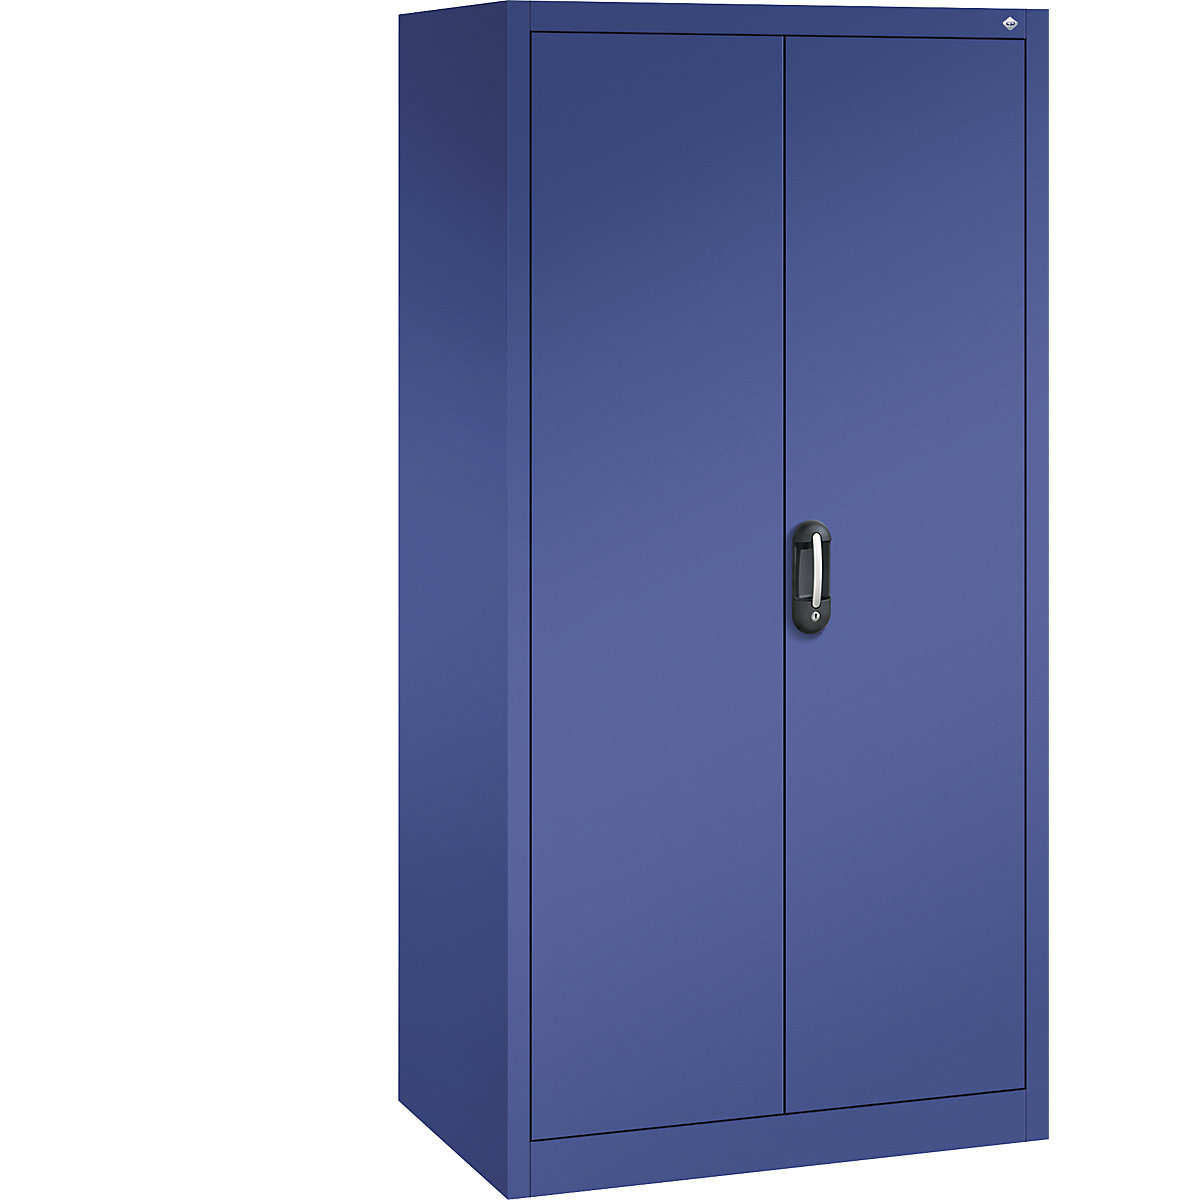 ACURADO universal cupboard – C+P, WxD 930 x 600 mm, lapis blue / lapis blue-23